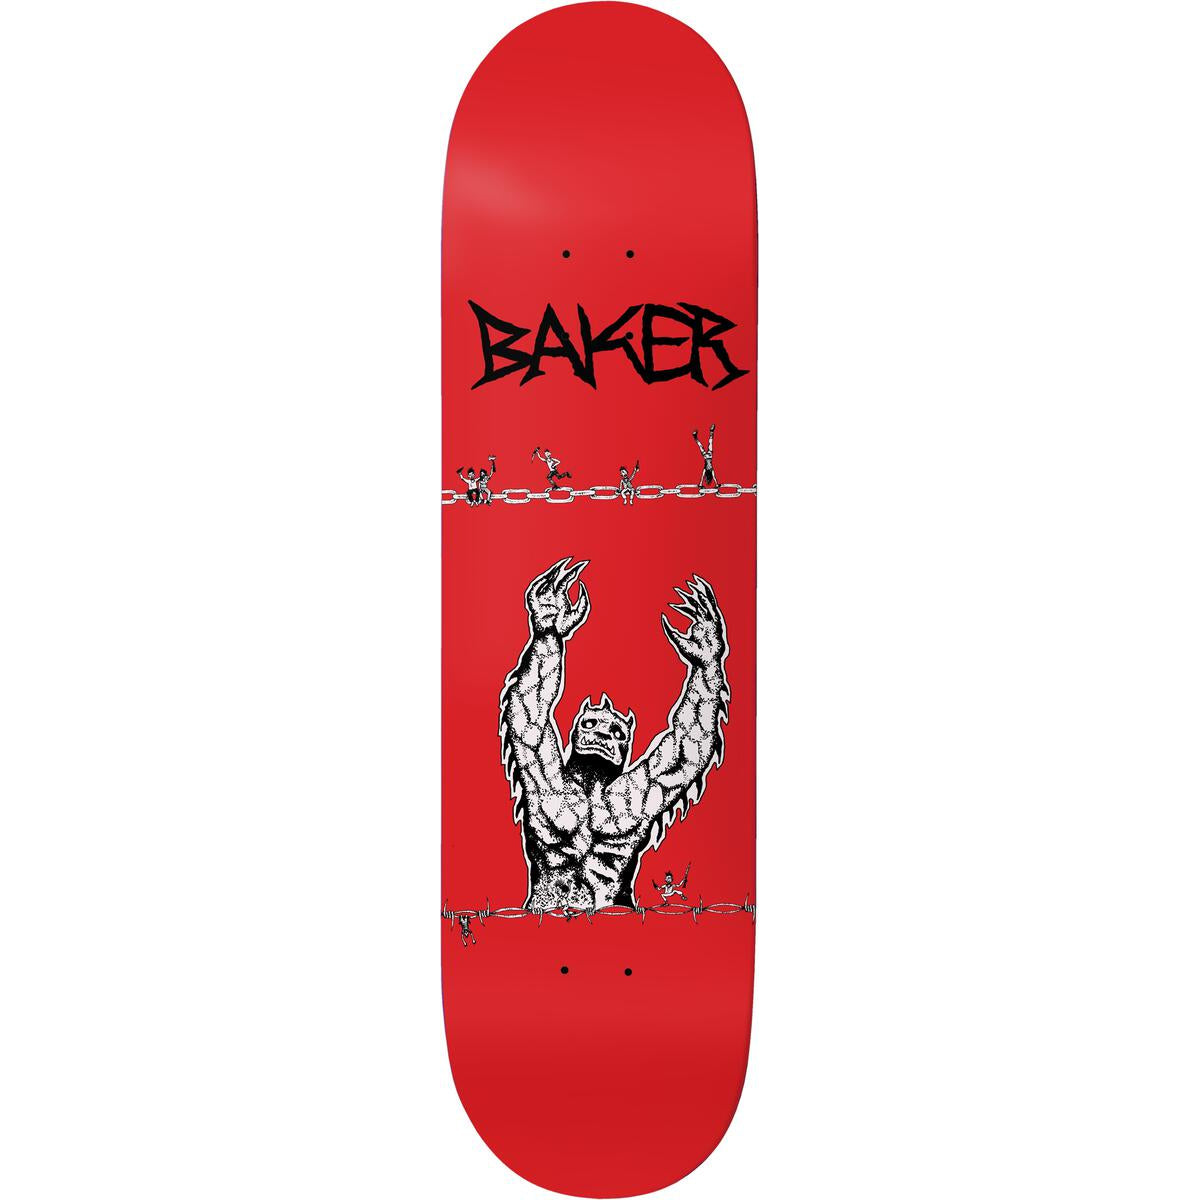 Kader Sylla Judgement Day Baker Skateboards Deck